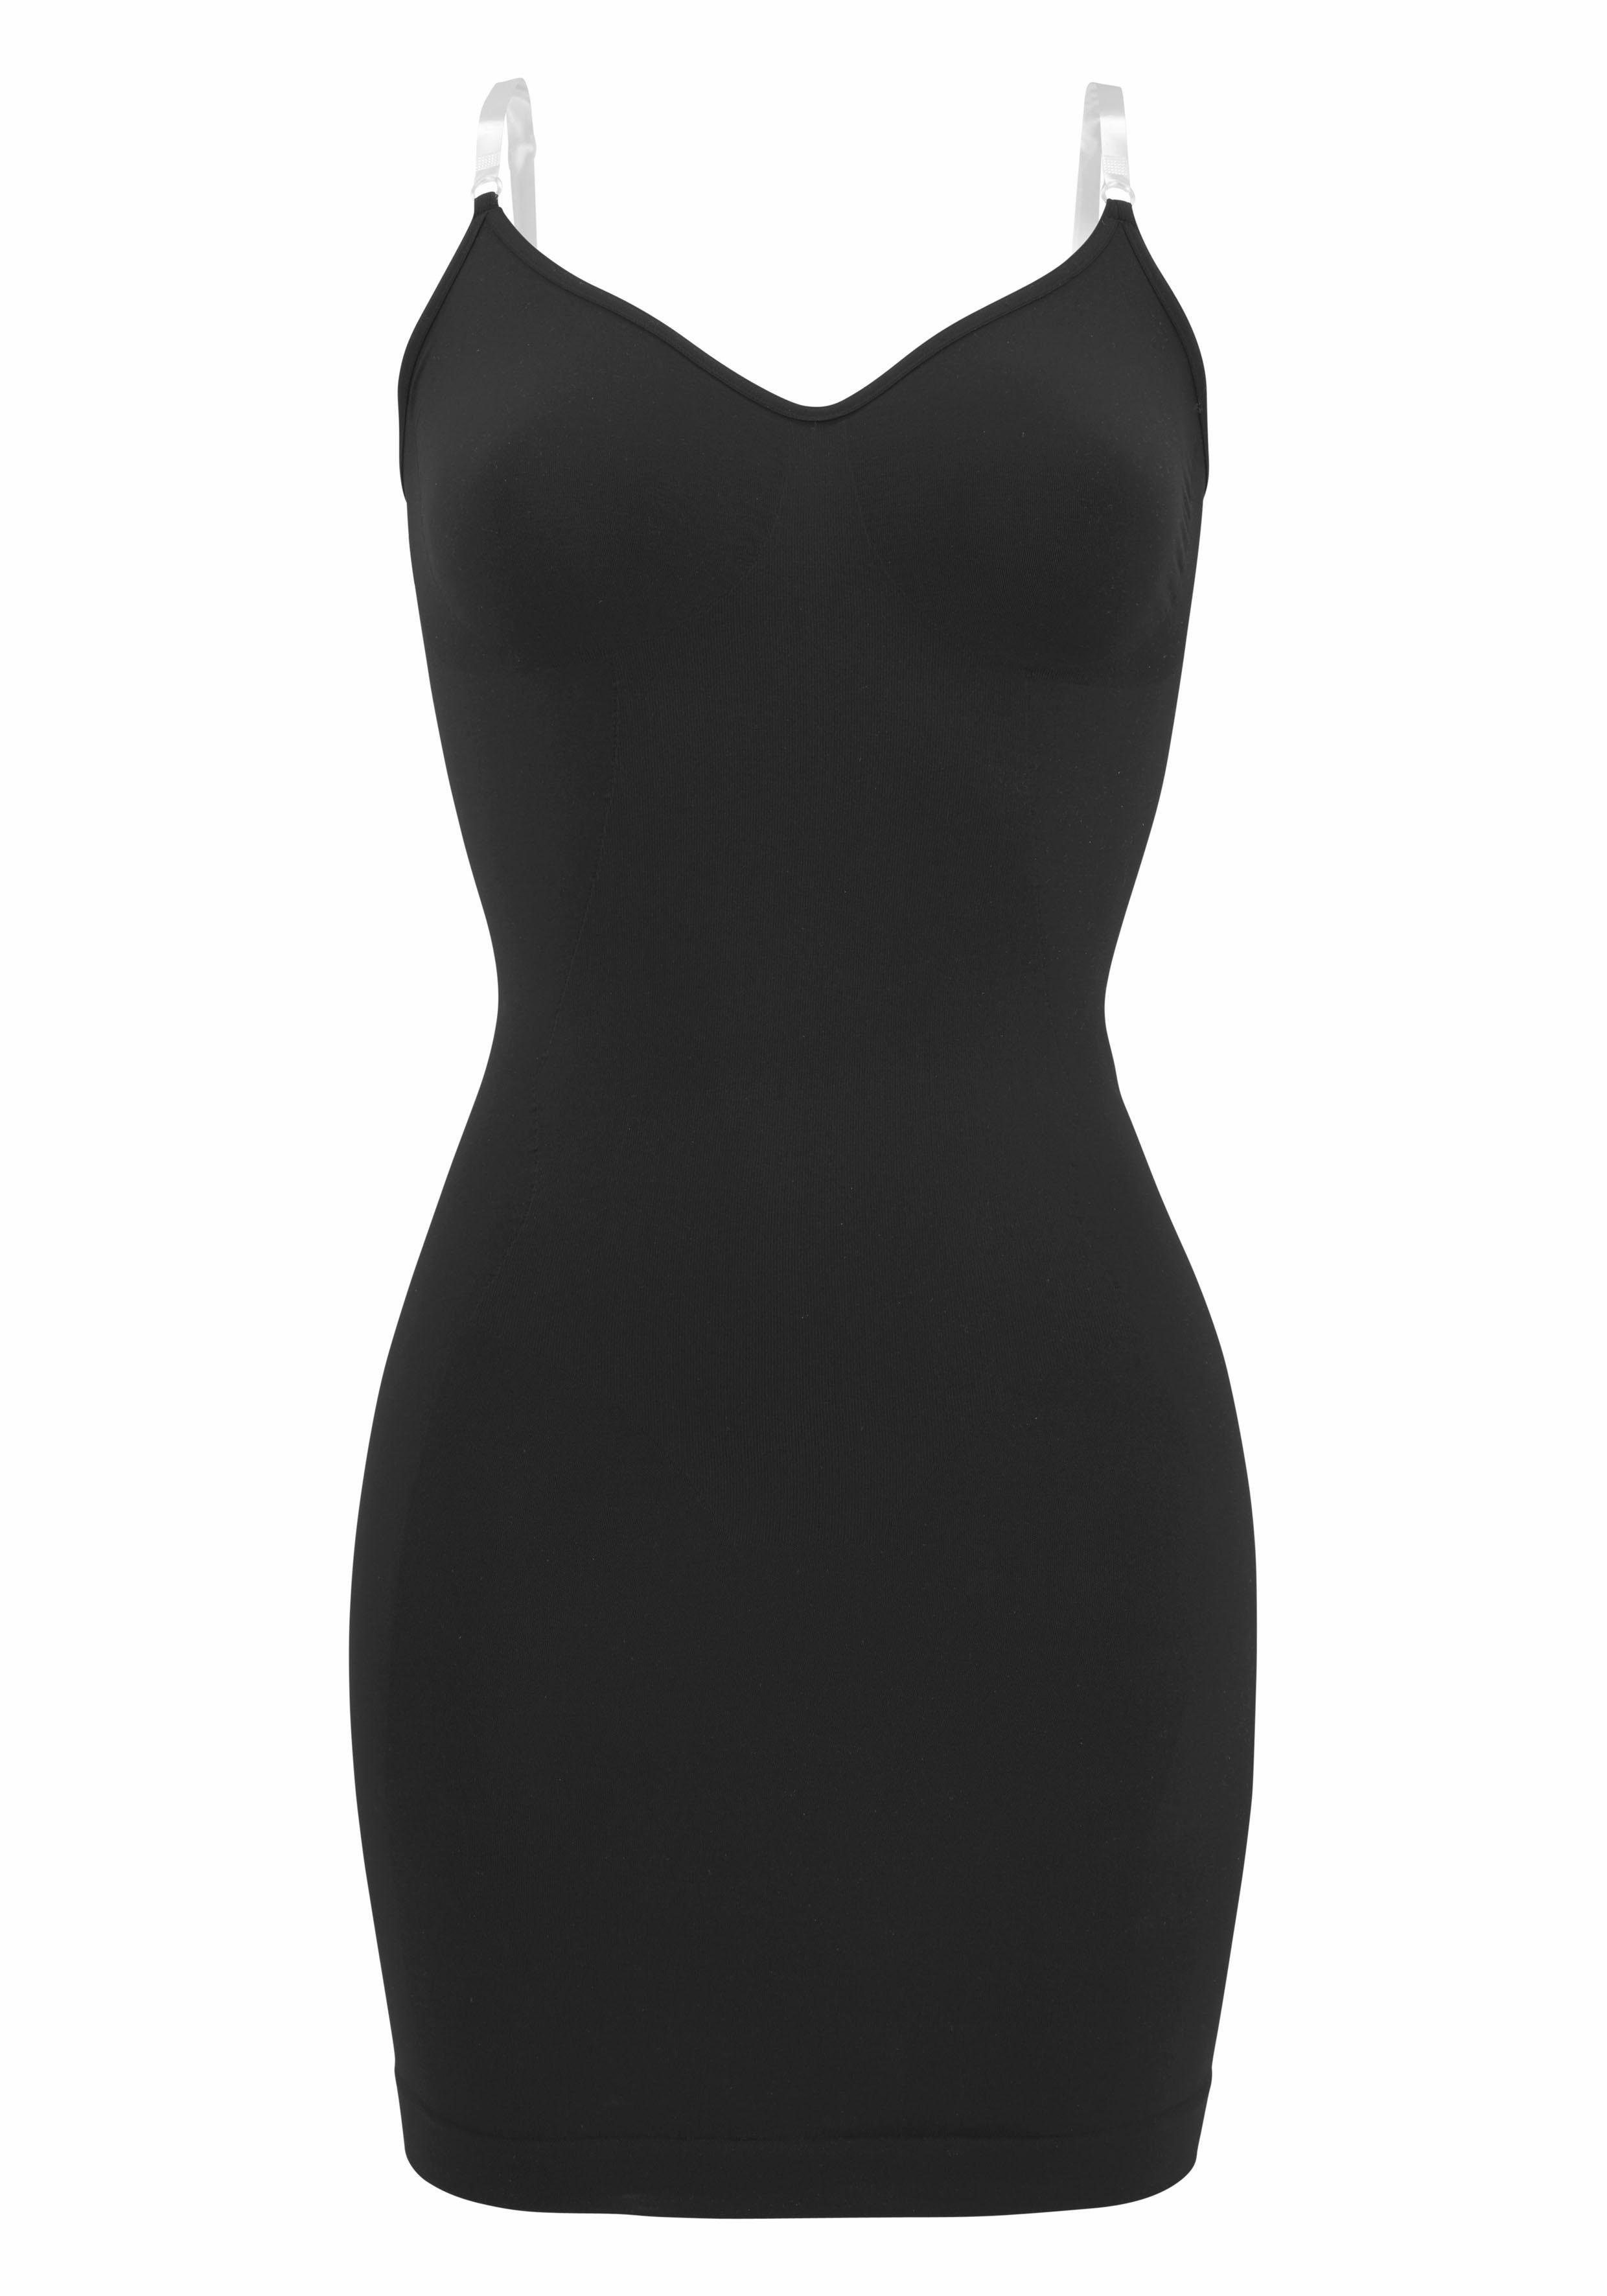 LASCANA Shaping-Kleid SEAMLESS mit transparenten Dessous schwarz Trägern, Basic